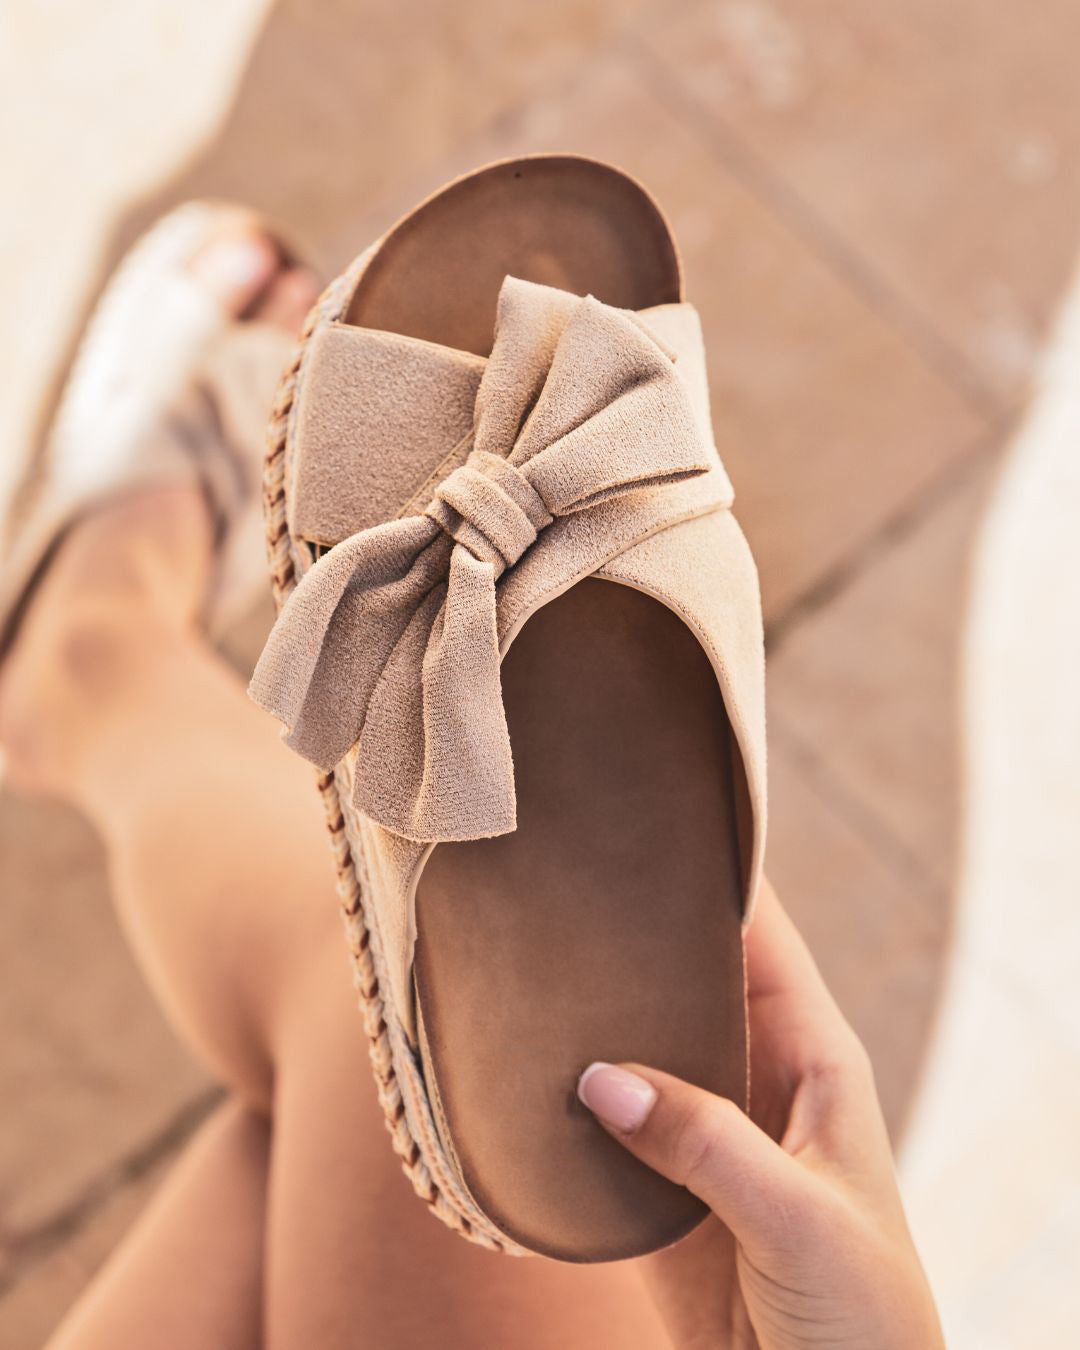 Sandale femme plateforme confort beige - Anais - Casualmode.fr